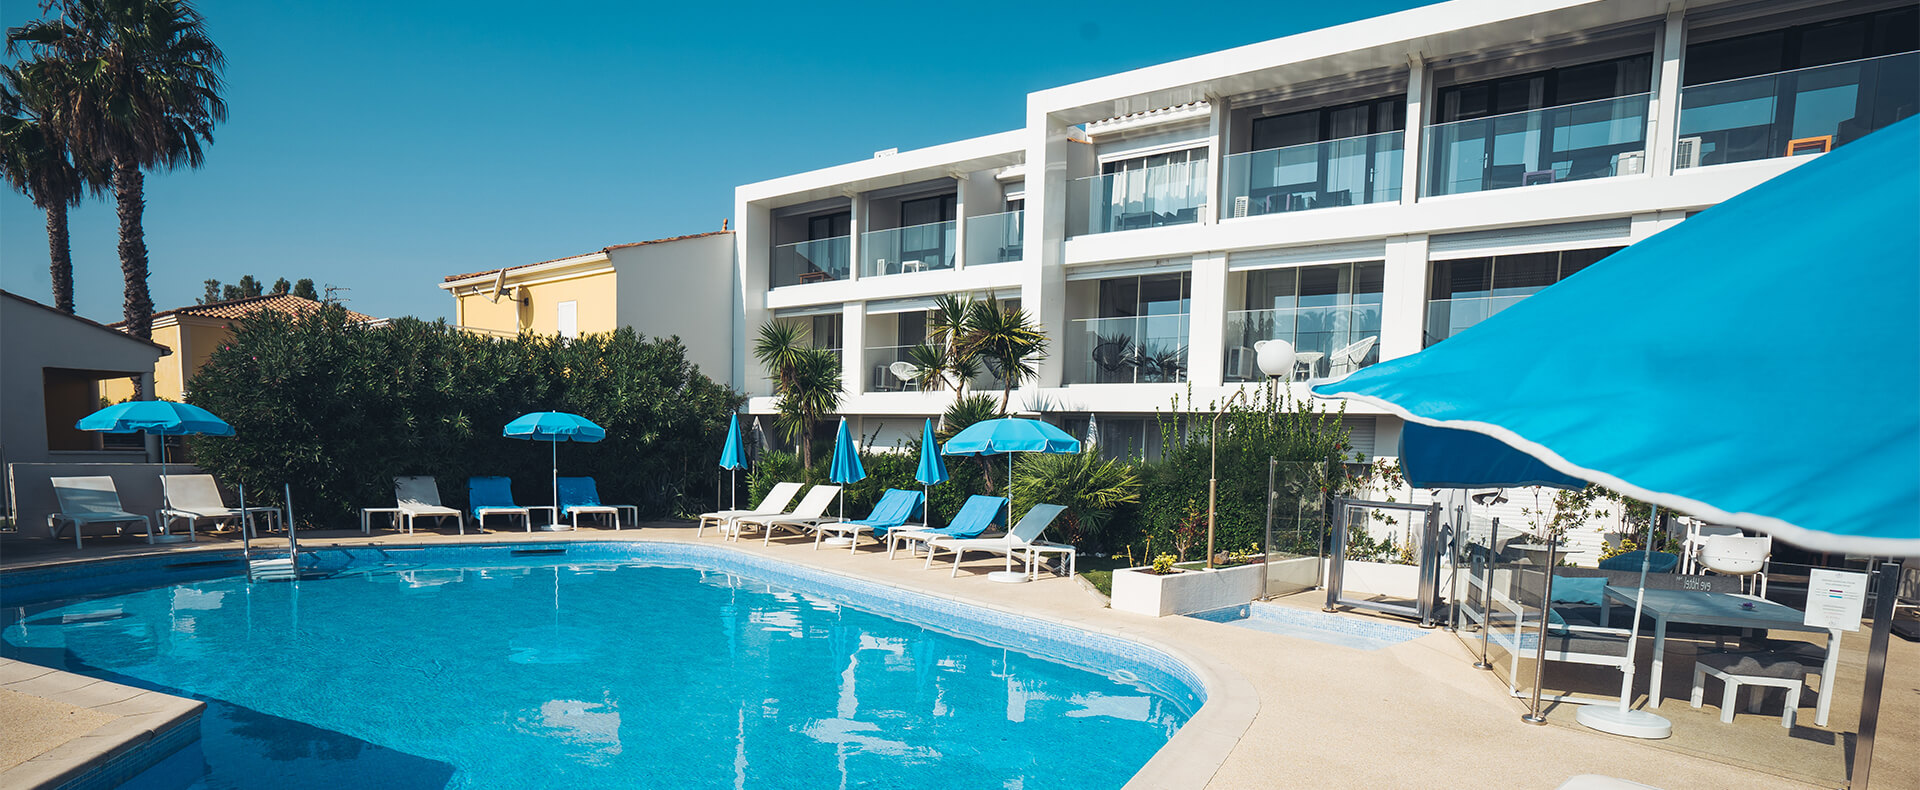 Swimming pool Hotel Eve, Hotel in Cap d'Agde